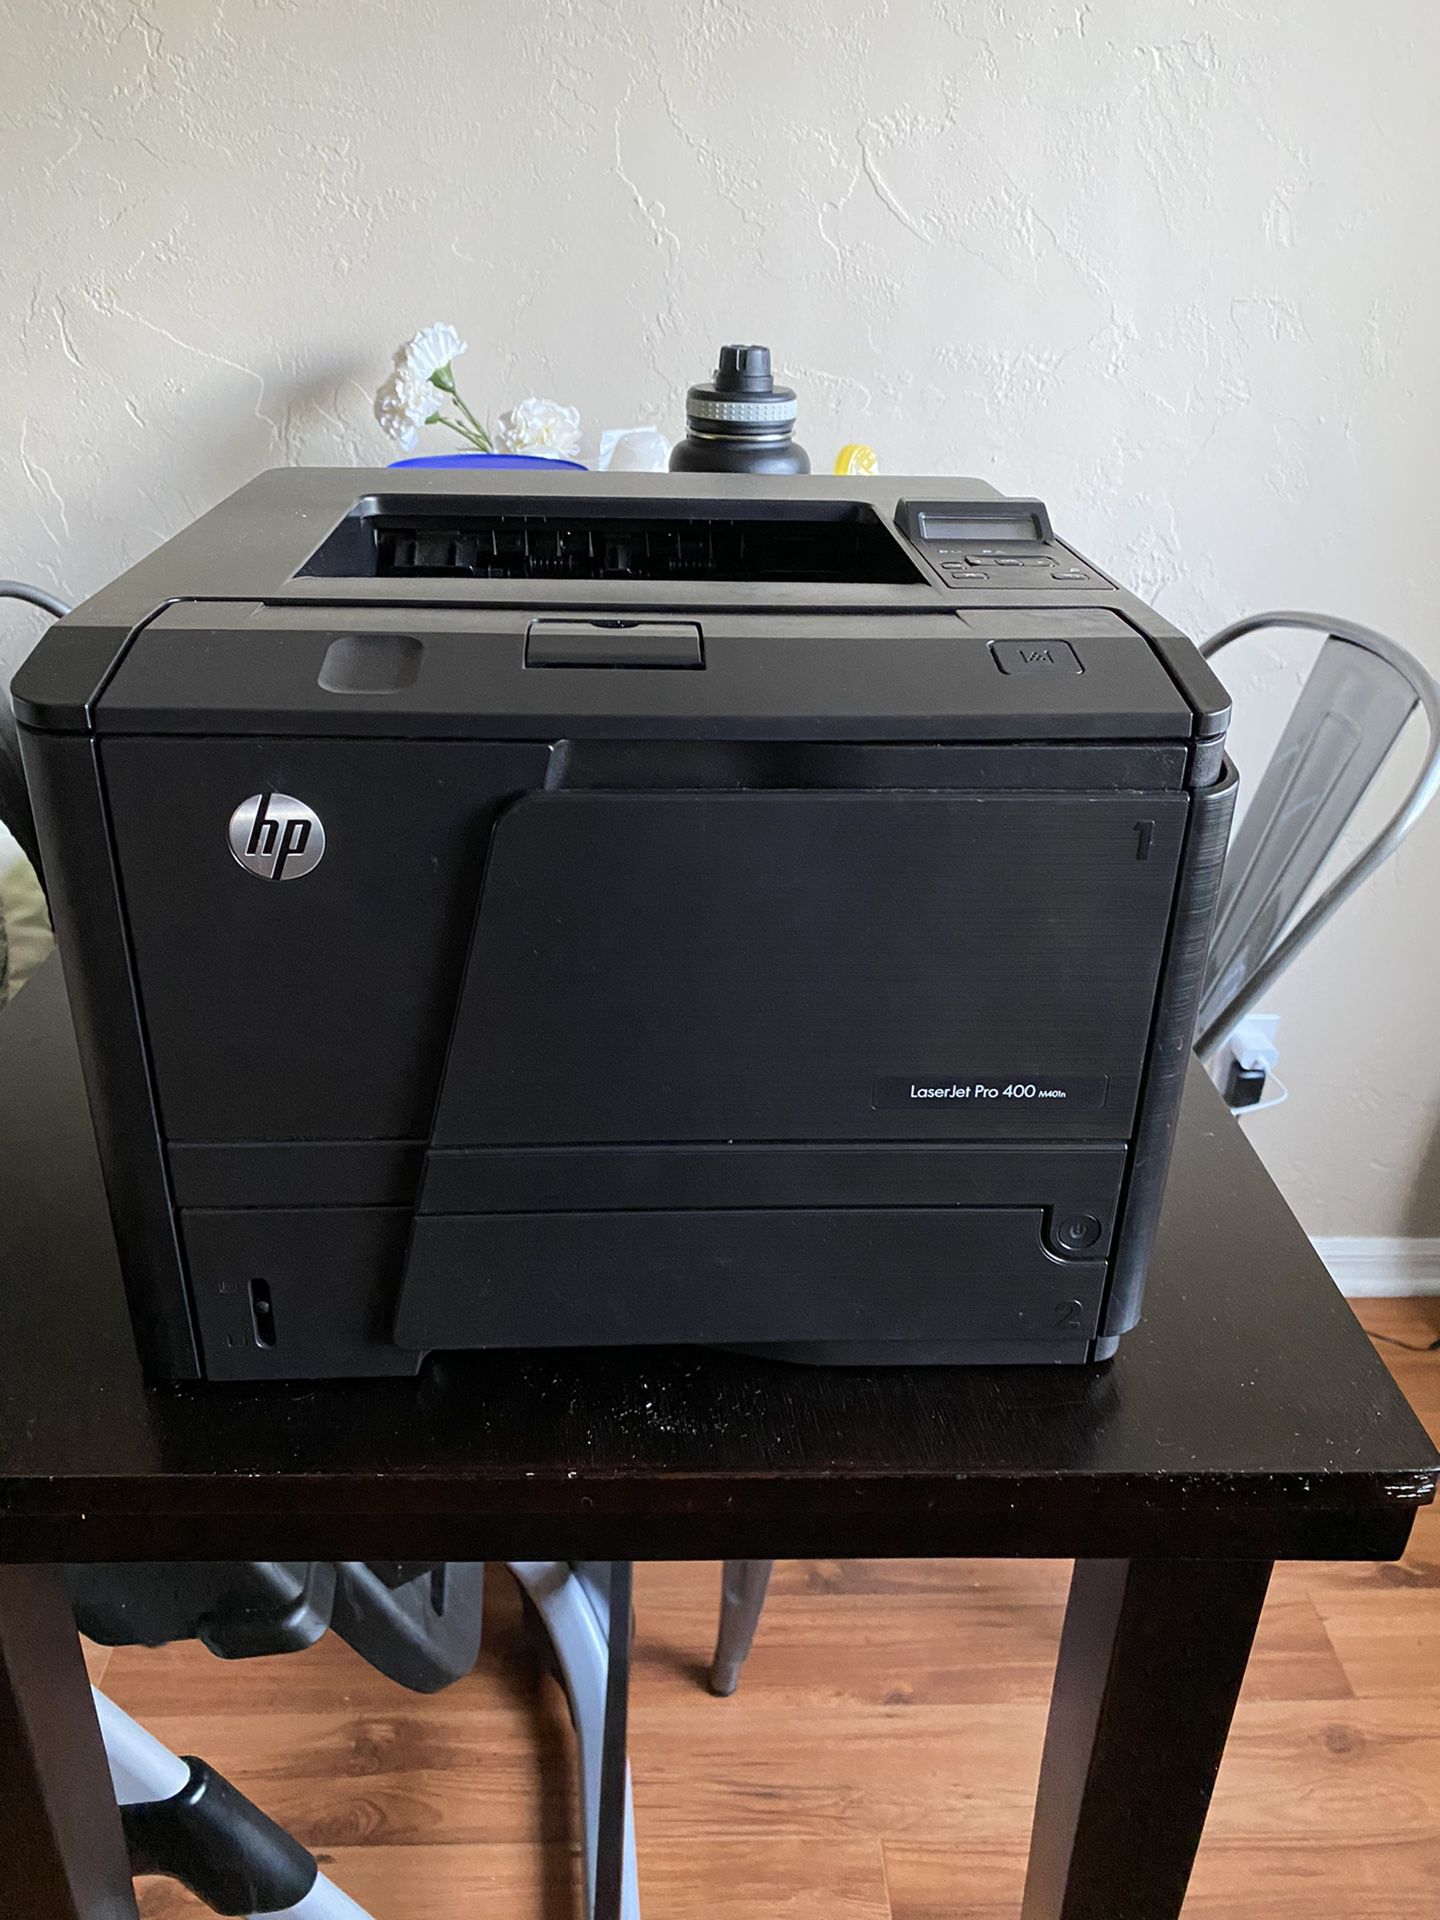 HP LASERJET PRO 400 Black And White Printer